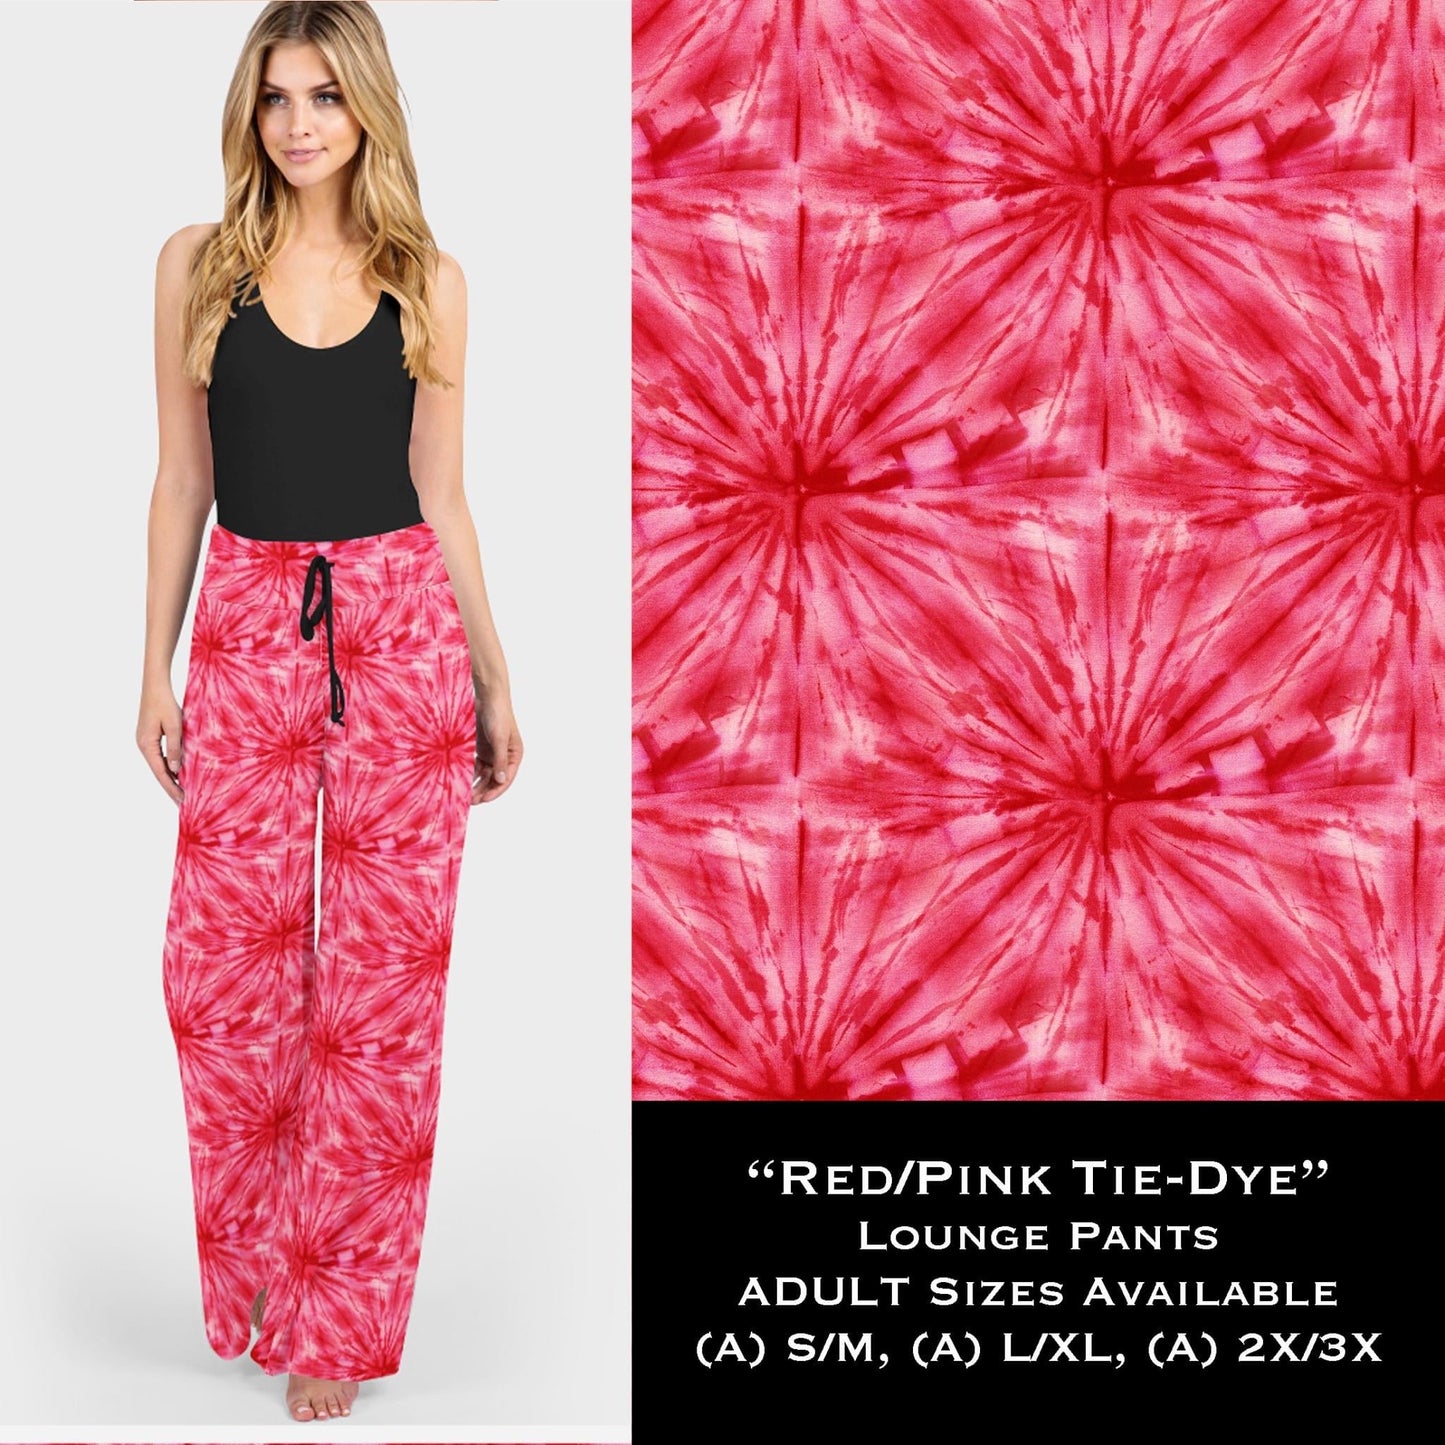 Red/Pink Tie Dye - Lounge Pants